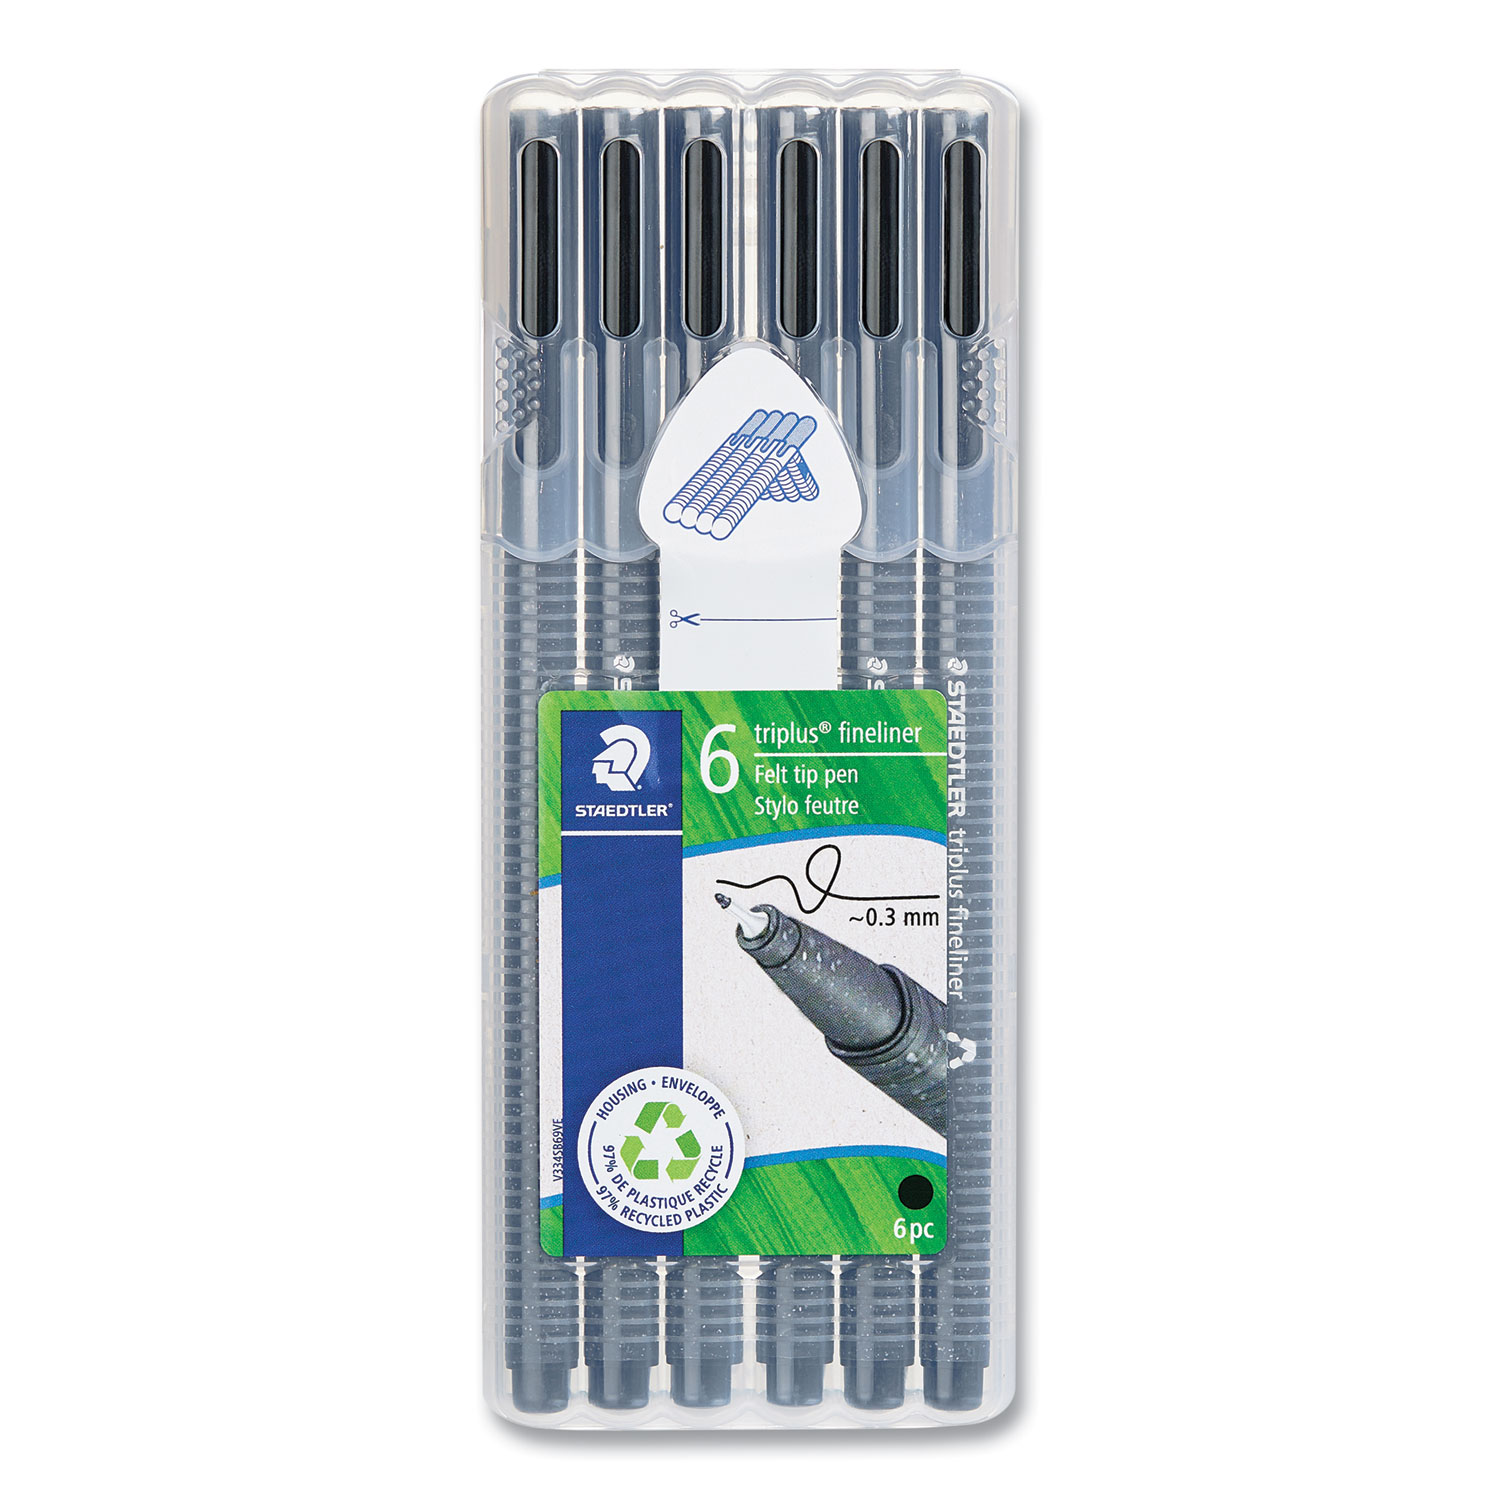 Staedtler Triplus Fineliner Triangular Pens 6 Pack